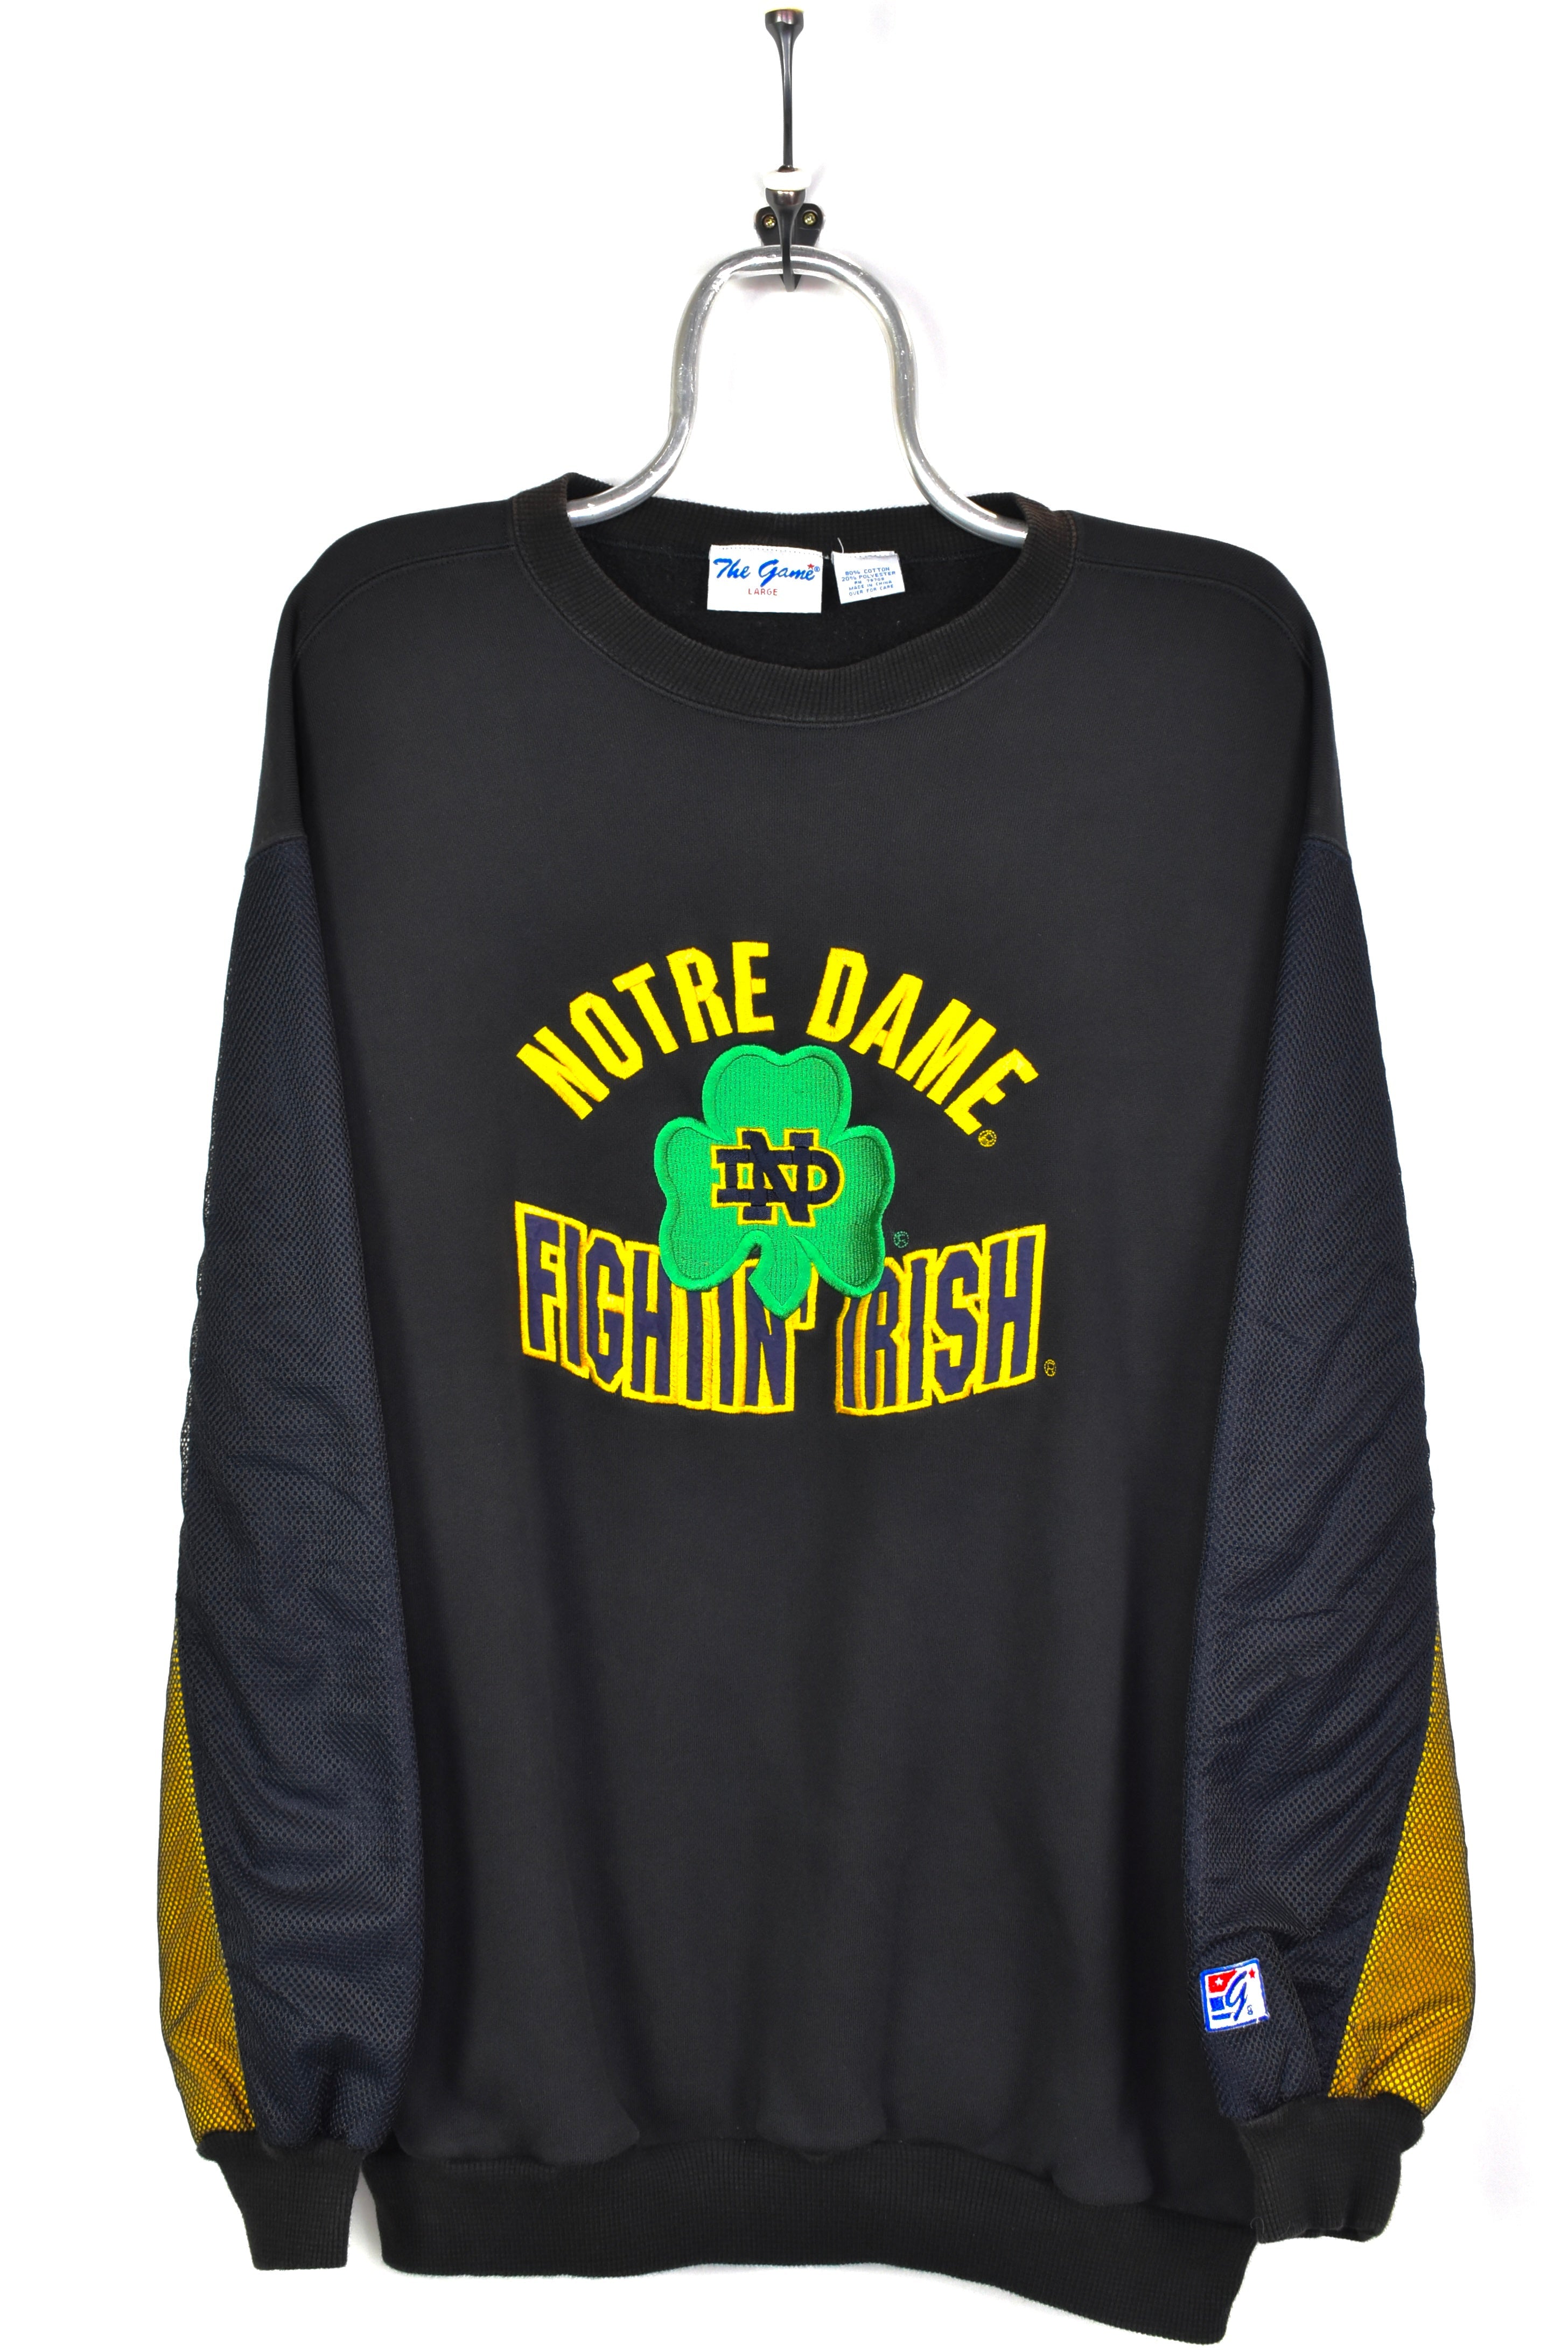 Vintage Notre Dame University sweatshirt, black embroidered crewneck - AU XL COLLEGE